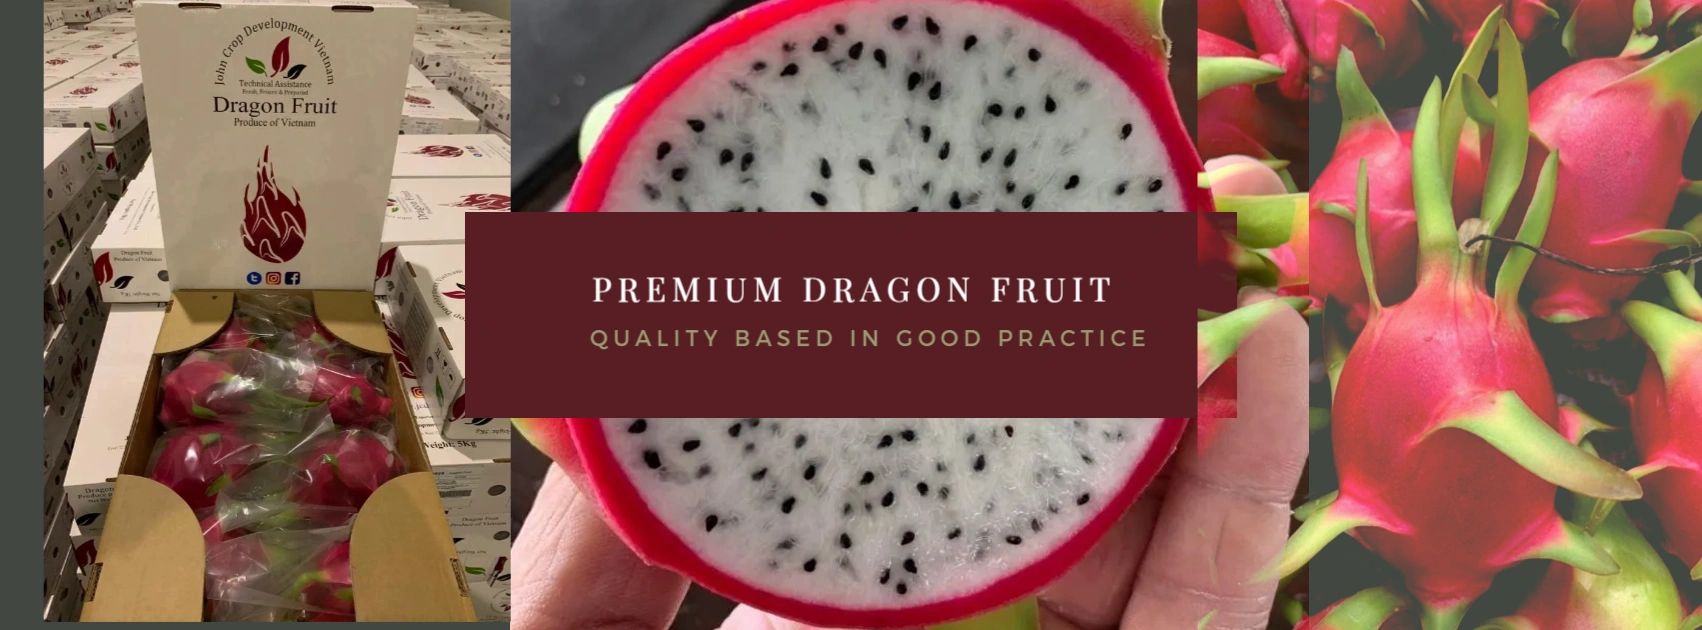 Dragon Fruit sales ad